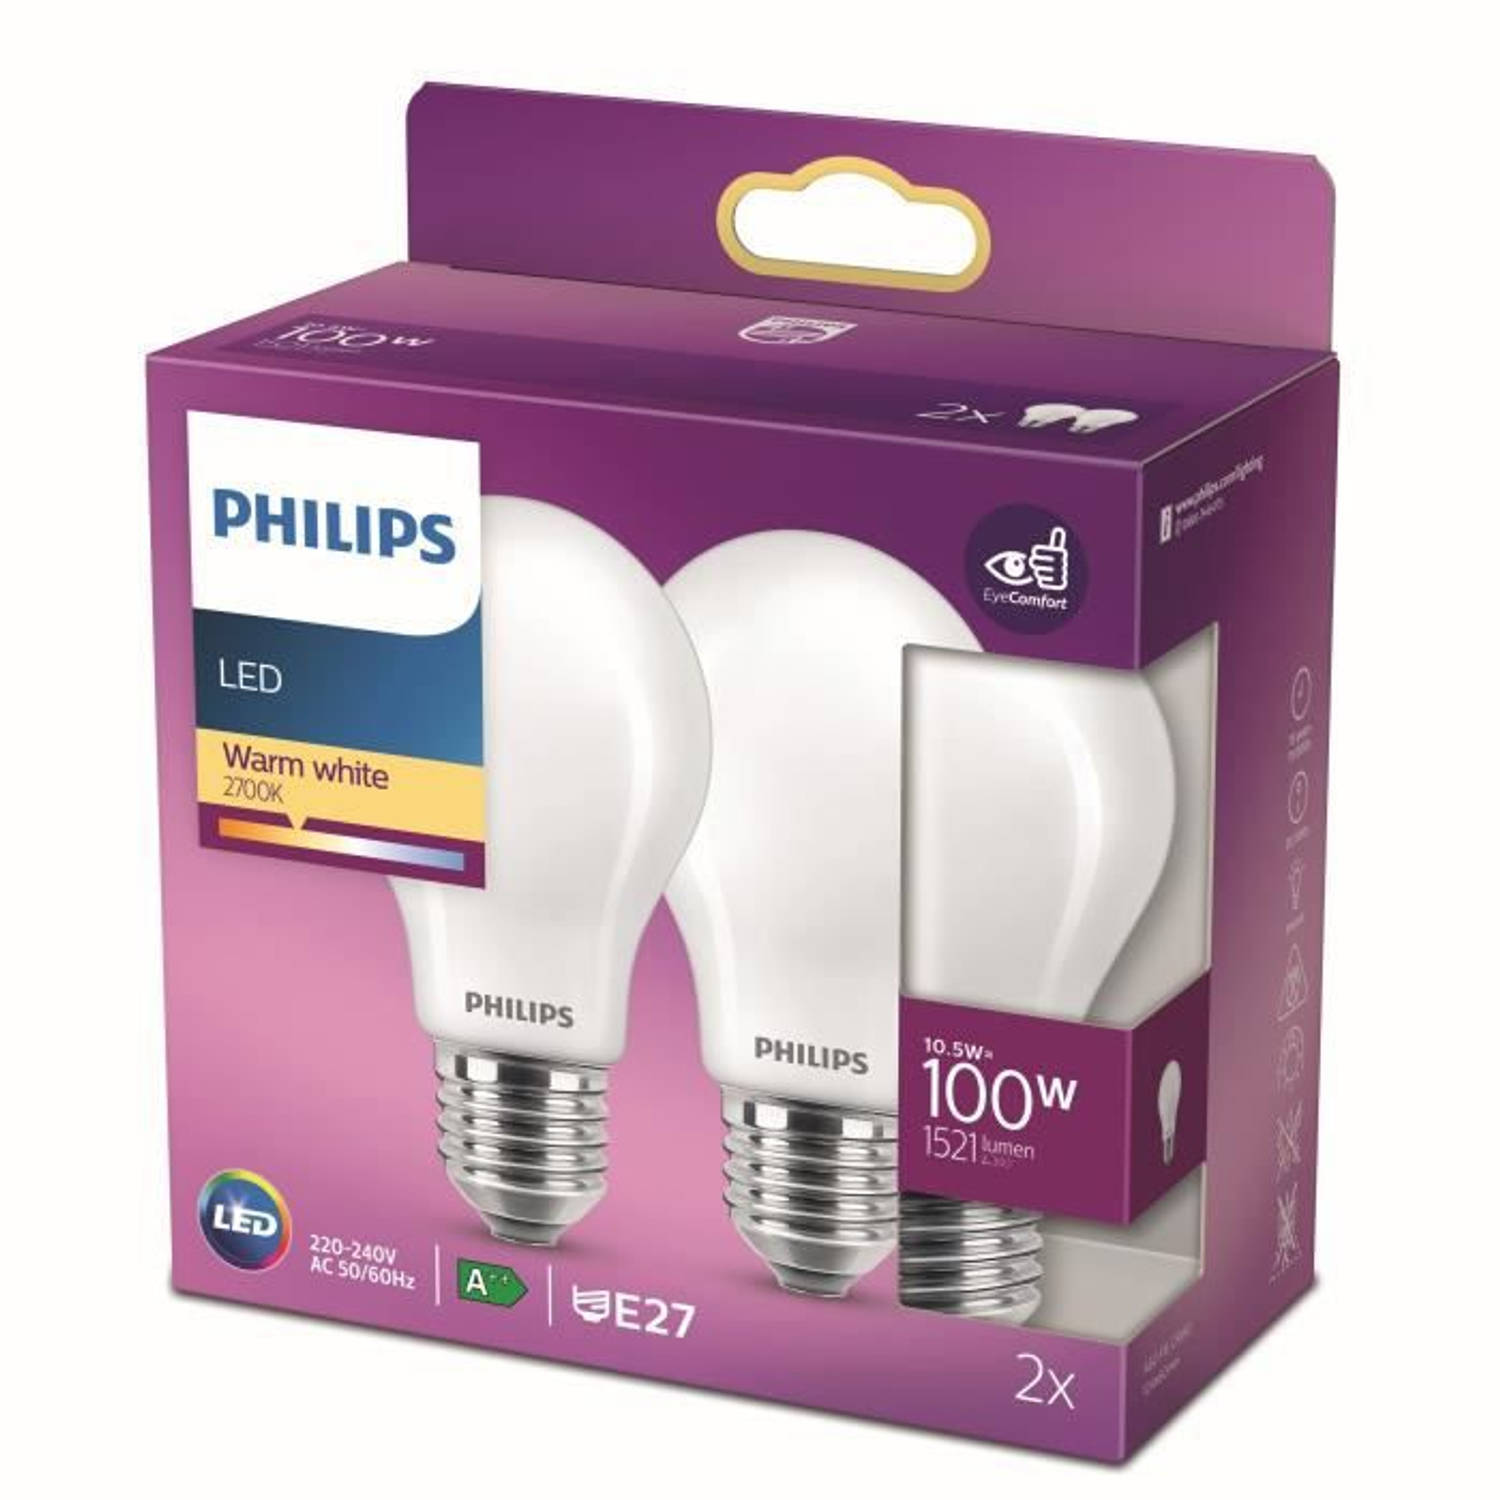 Philips LED-lamp Equivalent 100W E27 Warmwit, niet-dimbaar, glas, set van 2